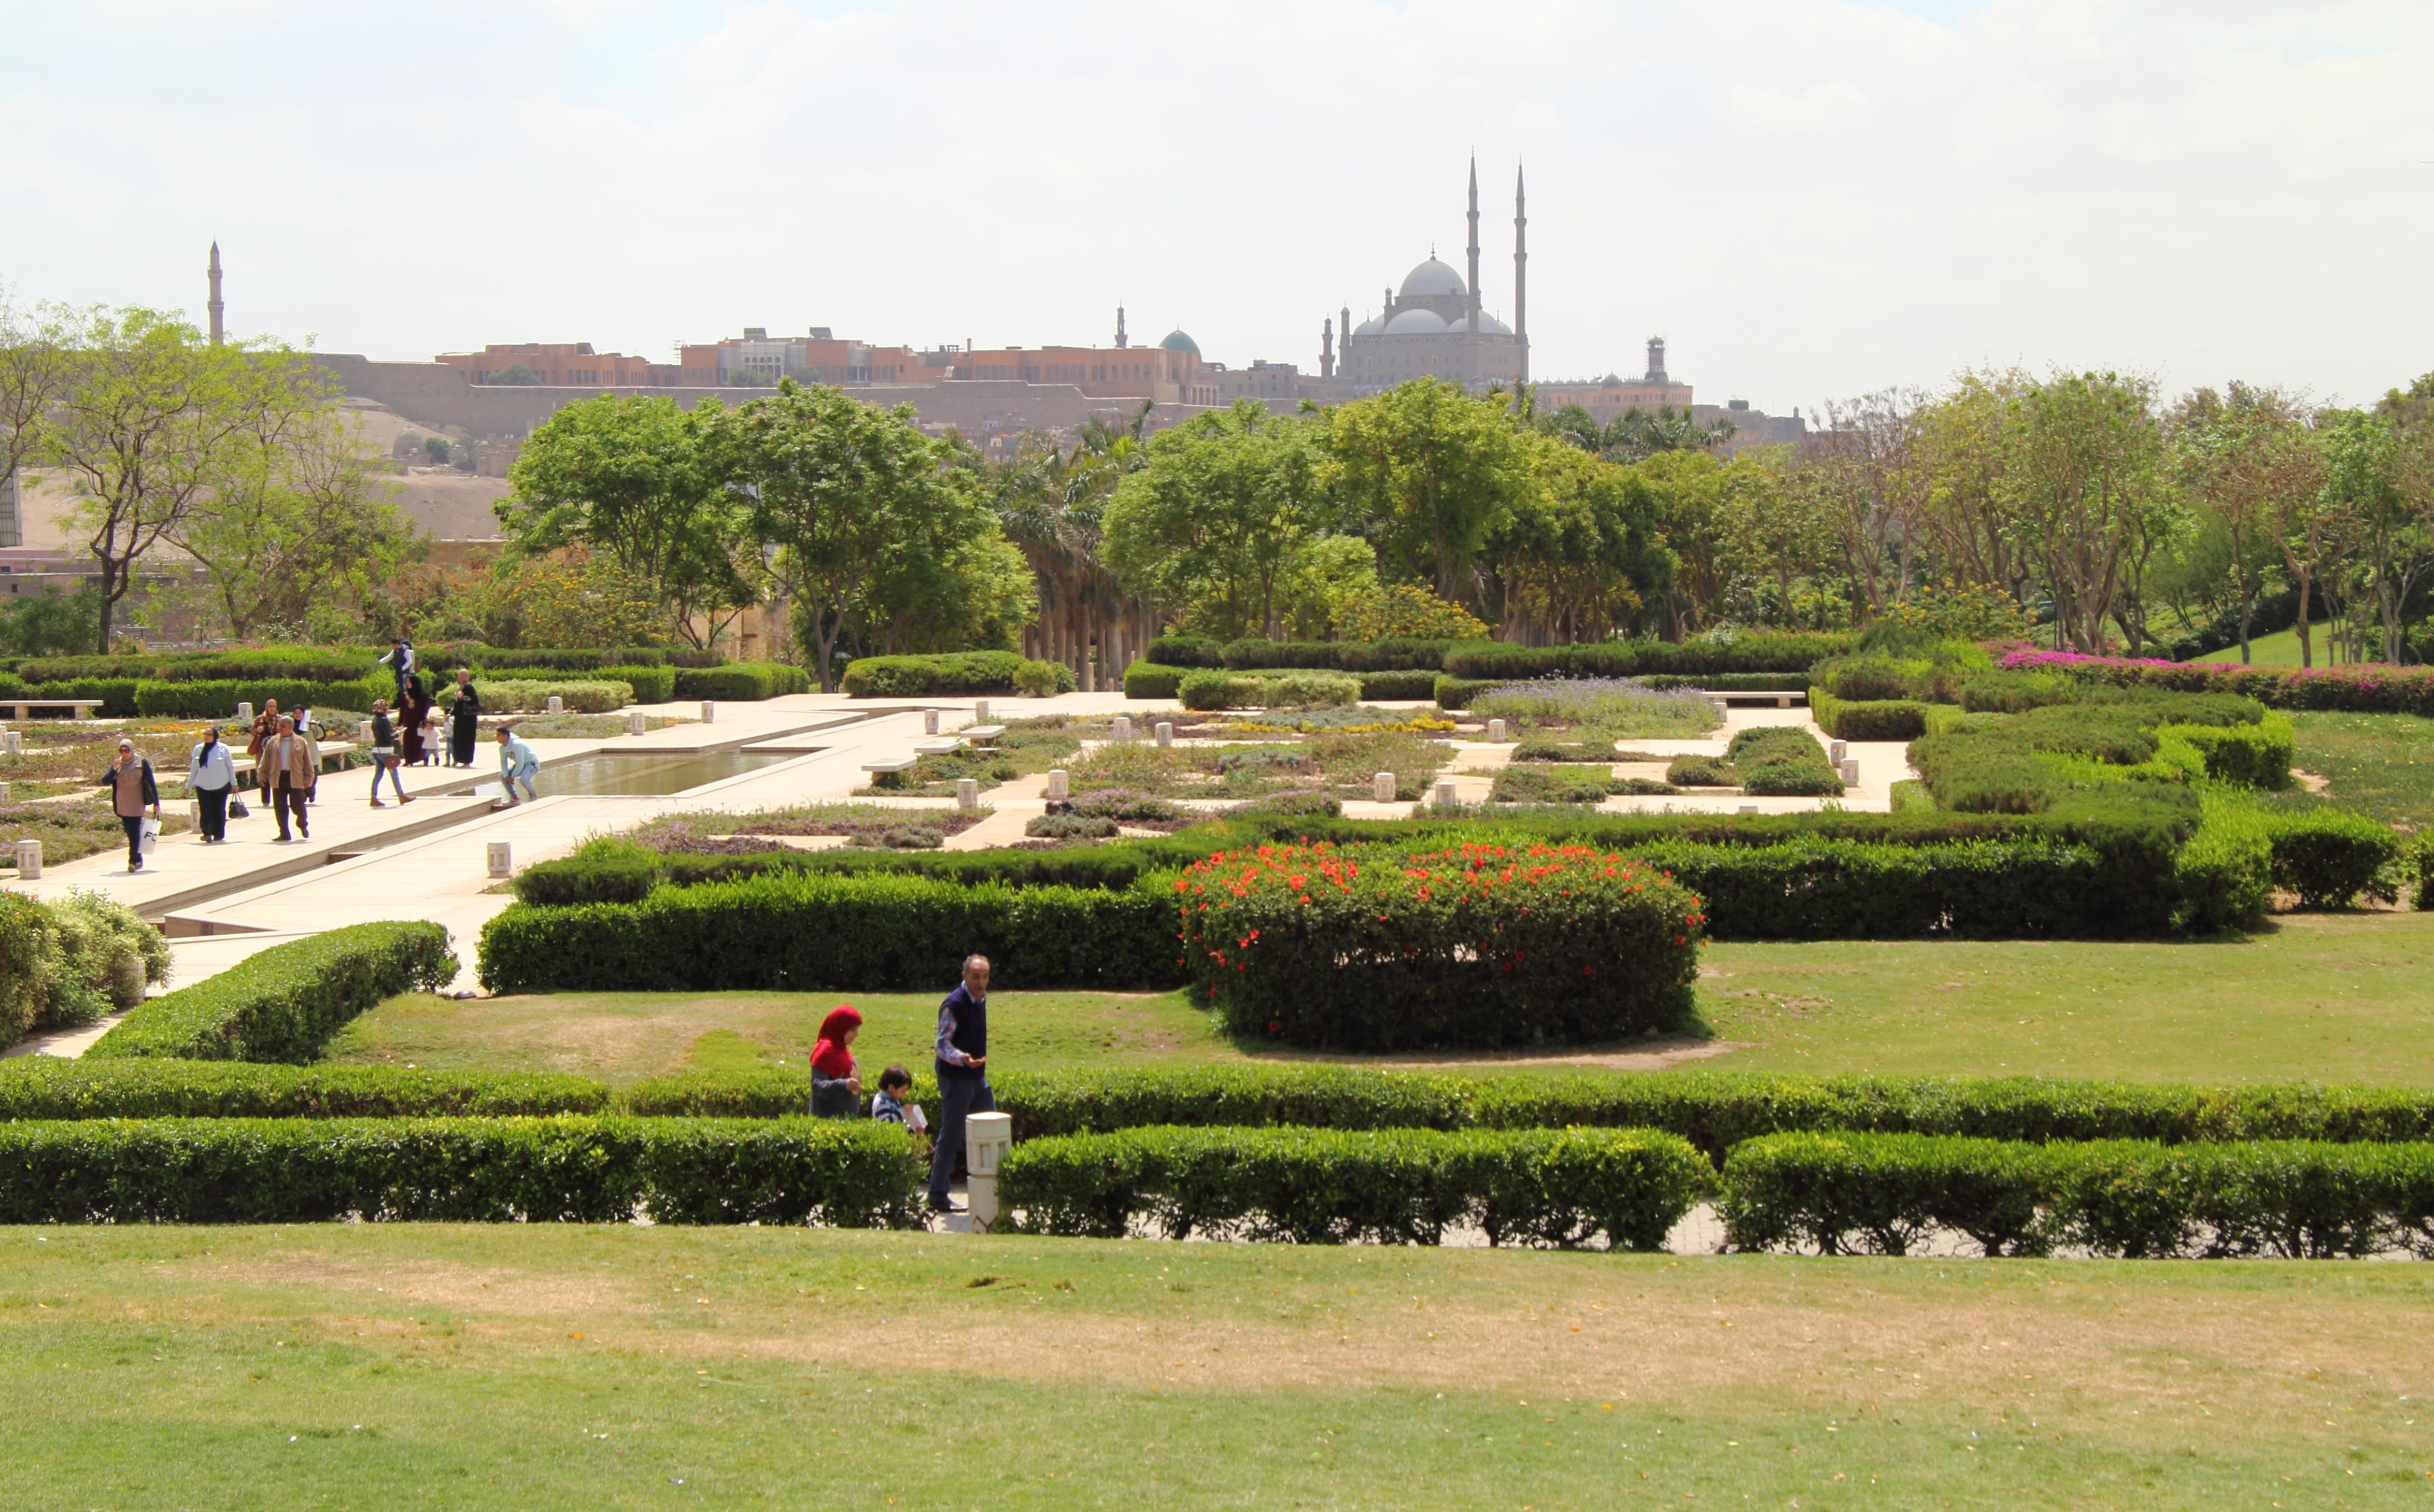 Stroll Through the Islamic Gardens